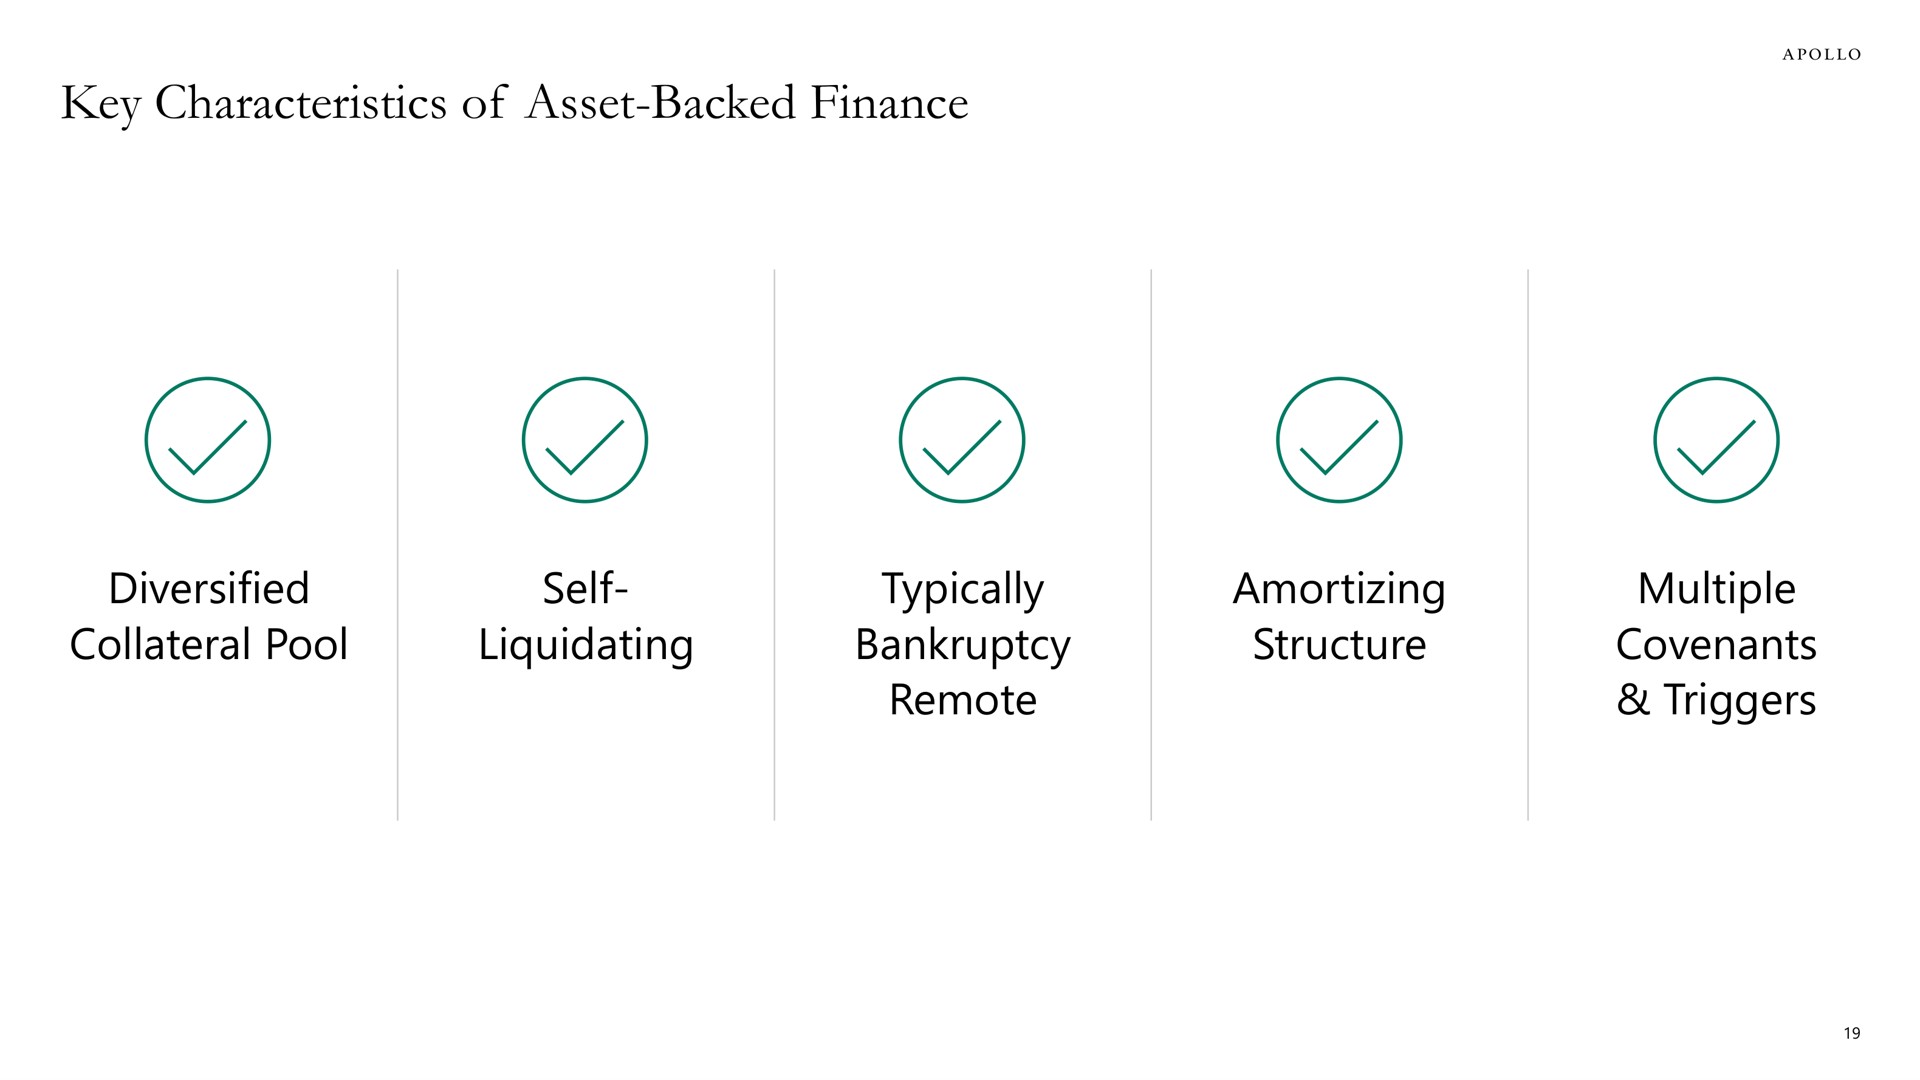 key characteristics of asset backed finance | Apollo Global Management